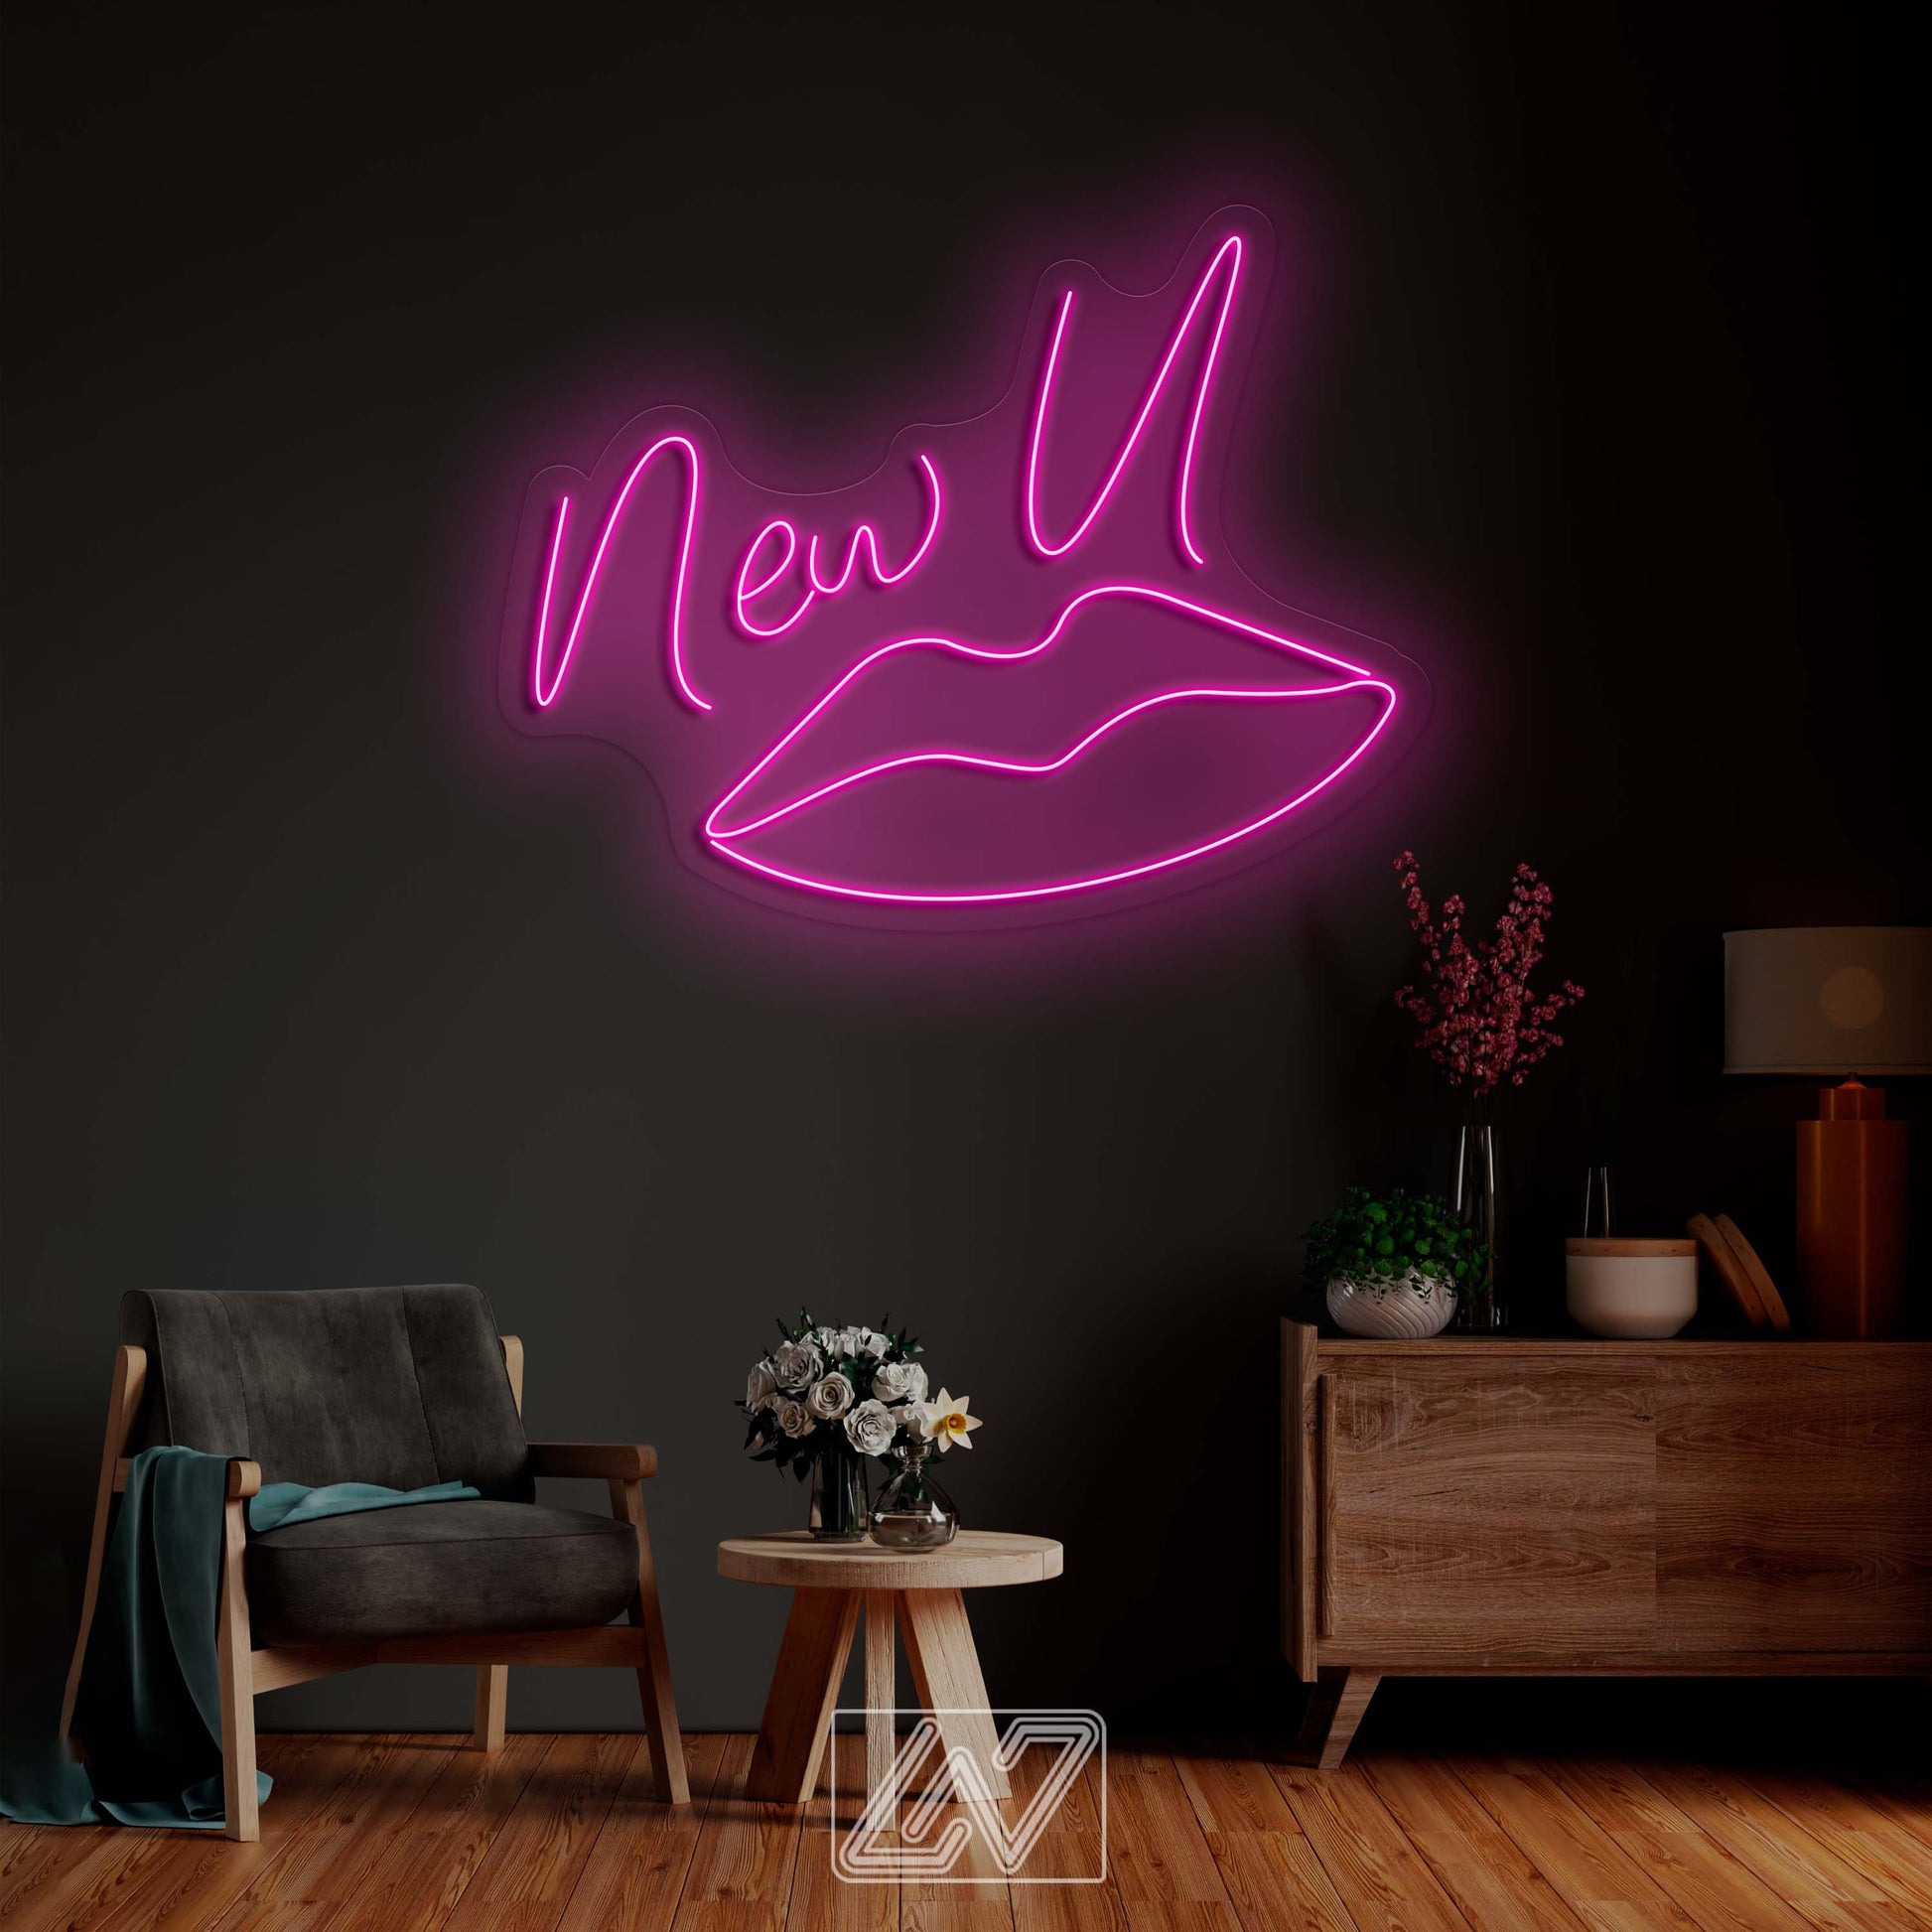 New U - LED Neon Sign Custom Woman lip Bedroom Party Bar Wall Room Decor LED Lip Neon light Wedding Personalized romance